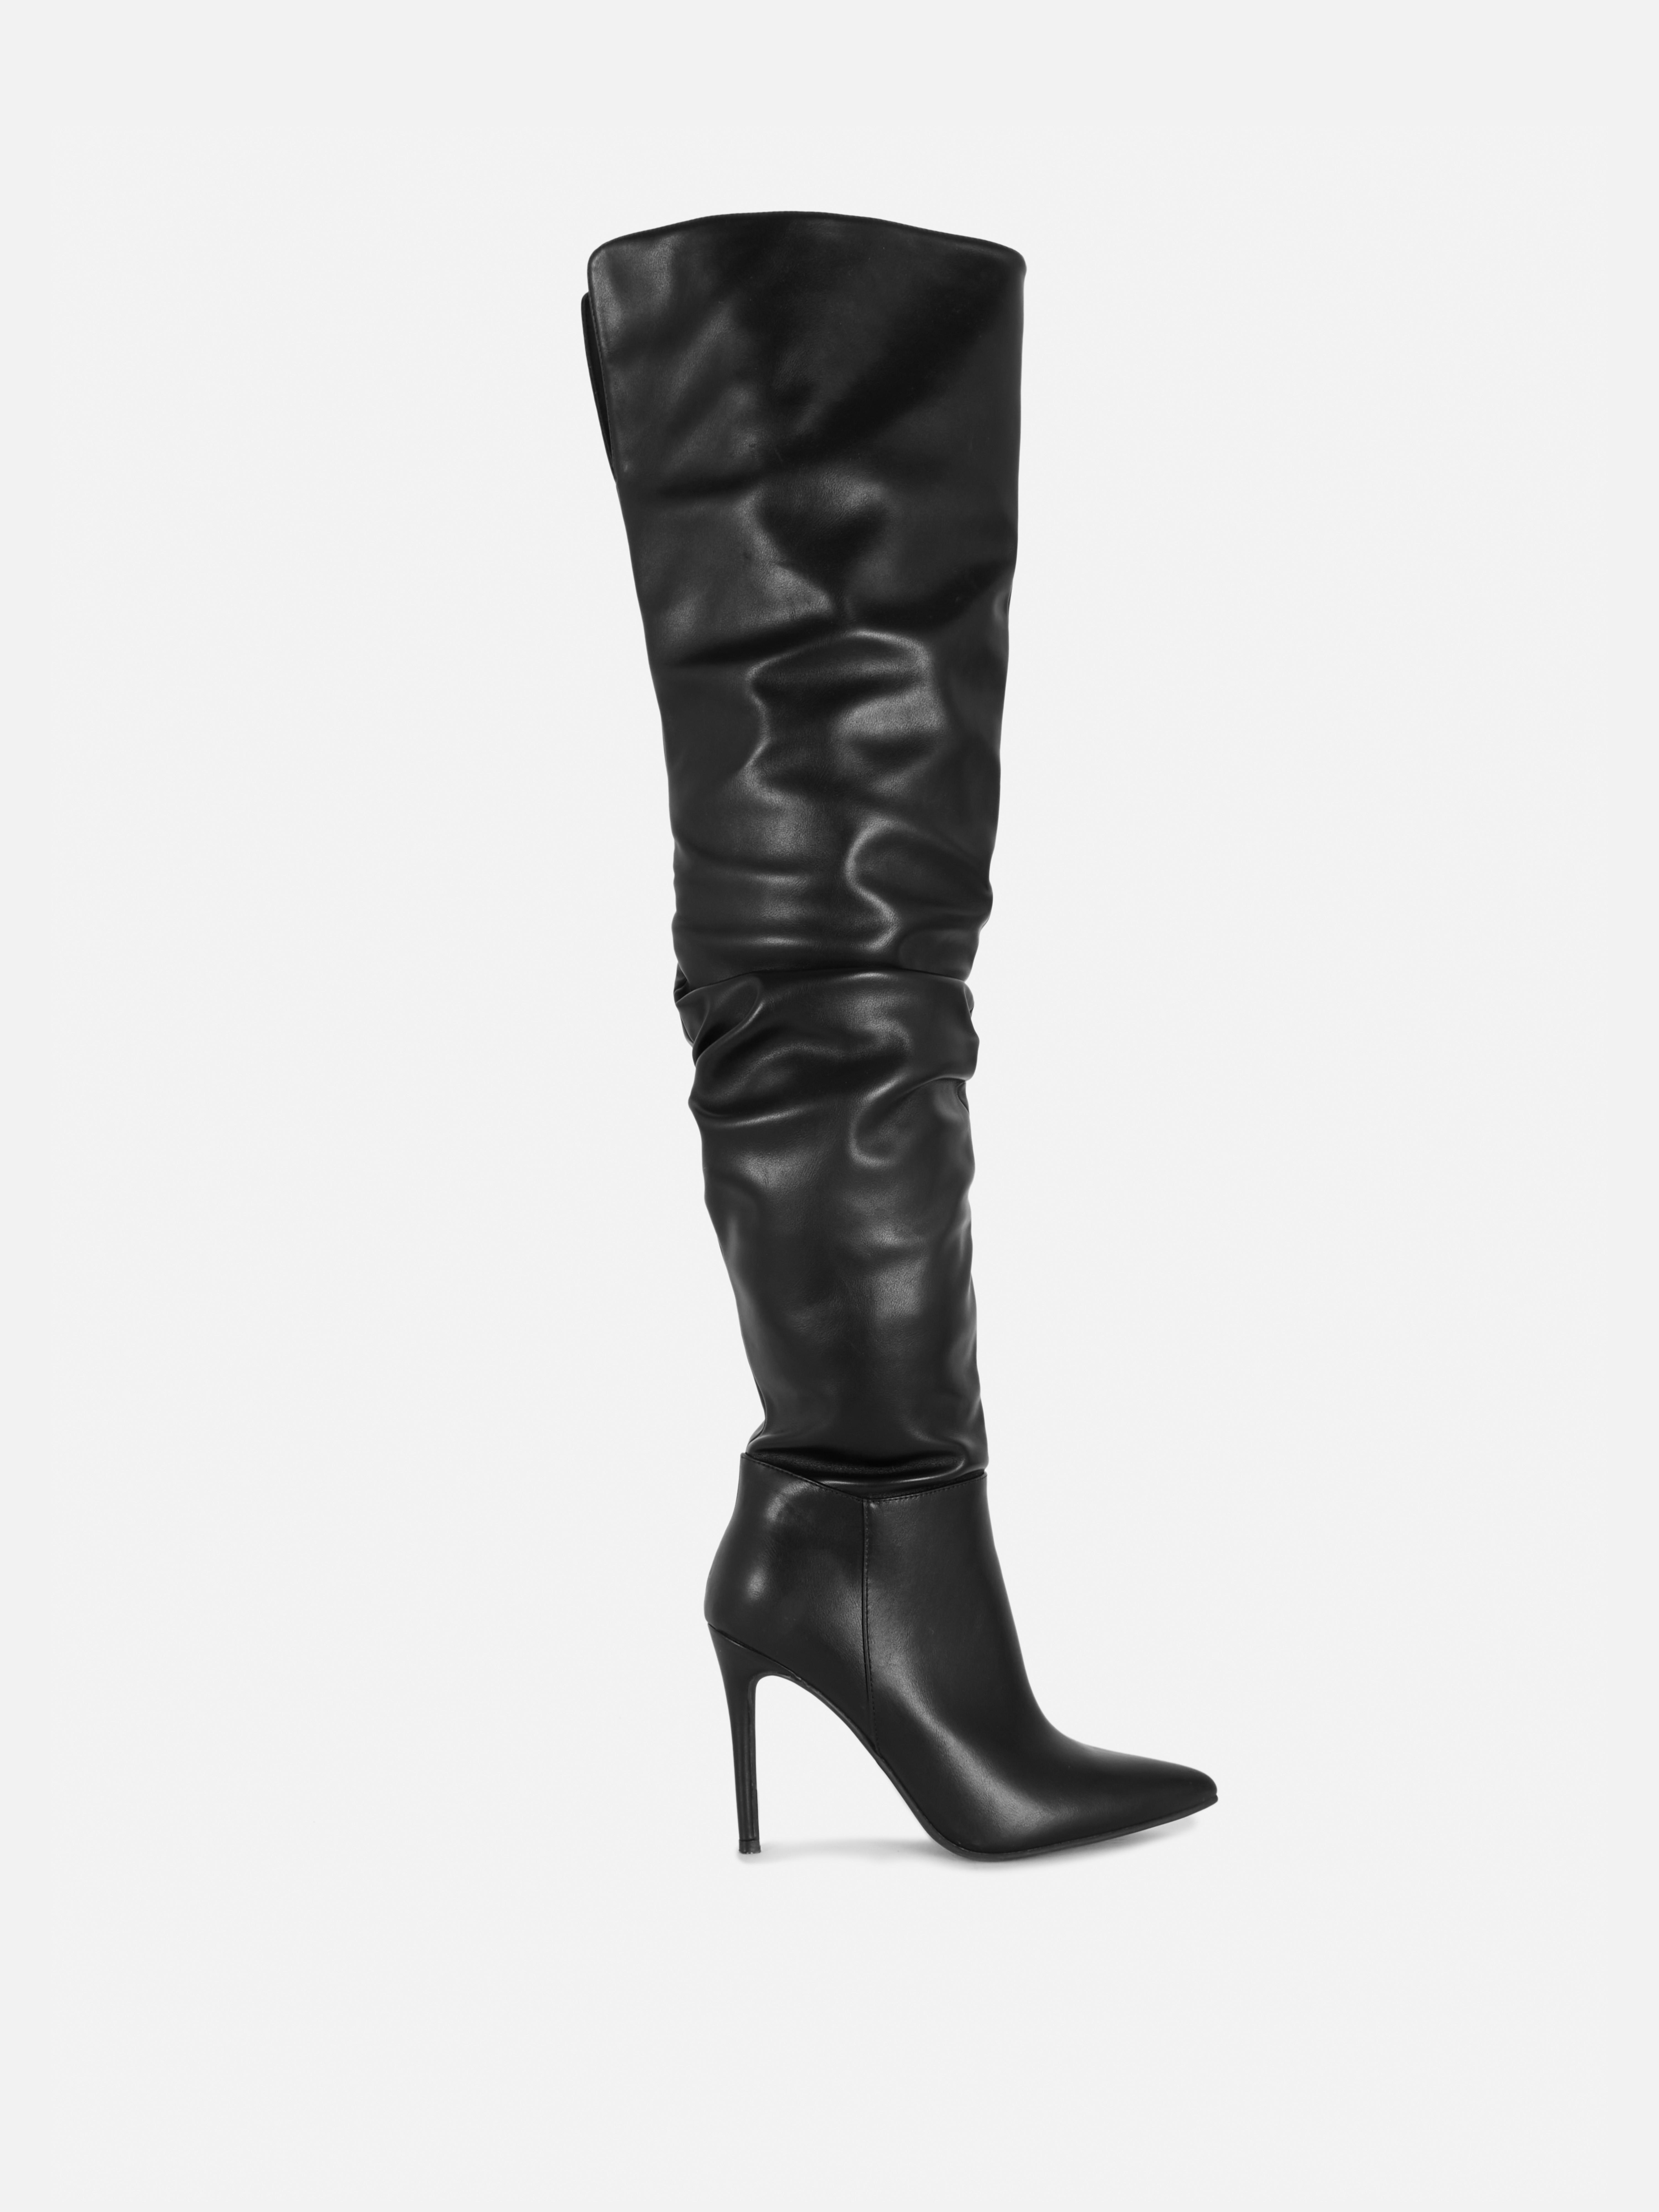 Rita Ora Thigh-High Stiletto Boots